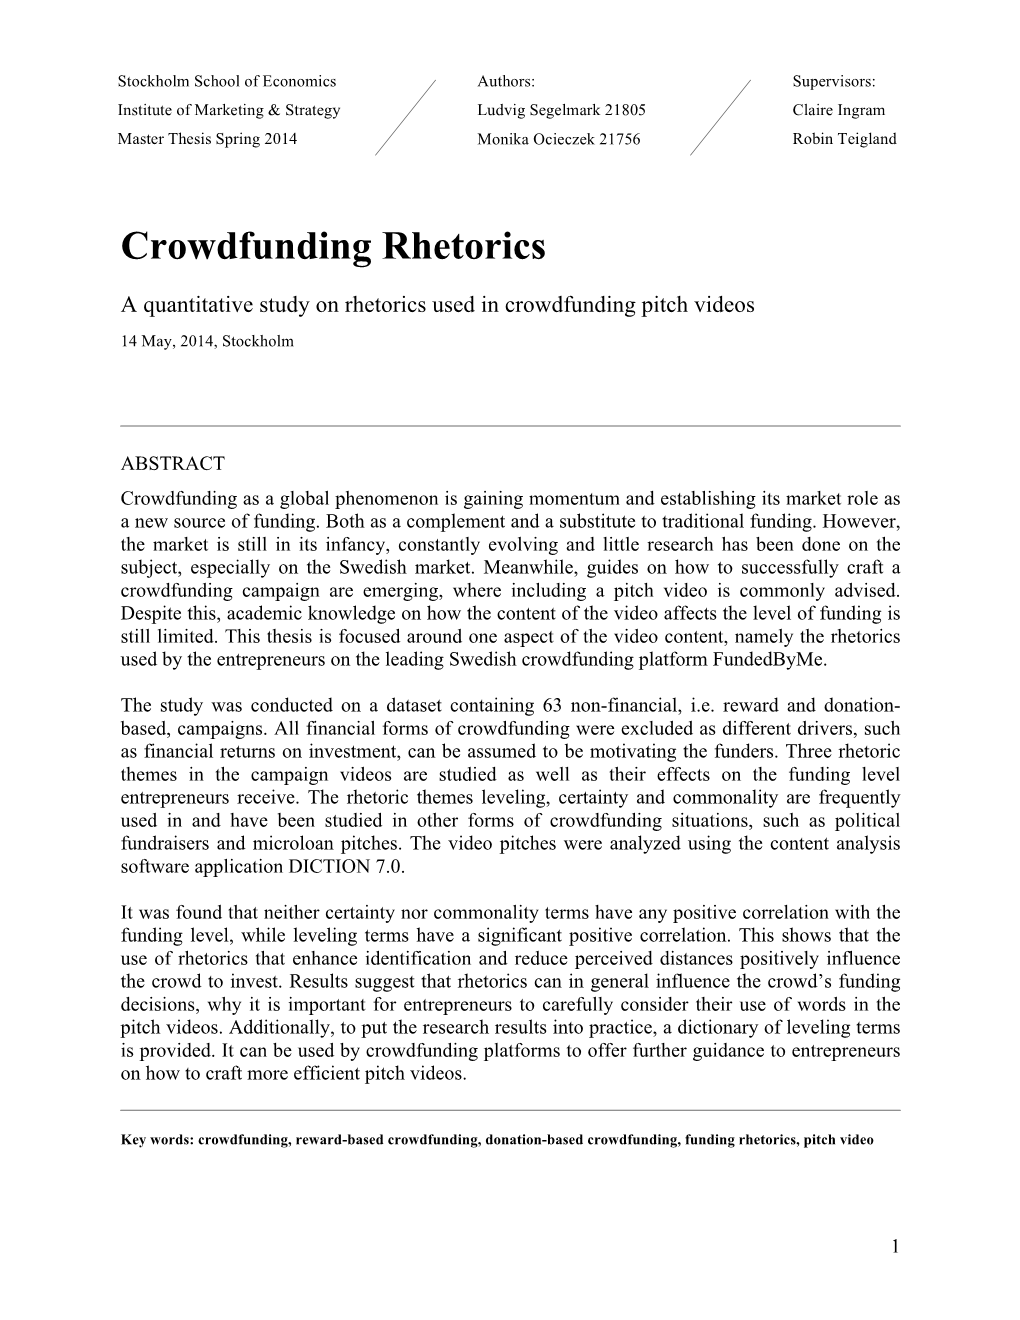 Crowdfunding Rhetorics